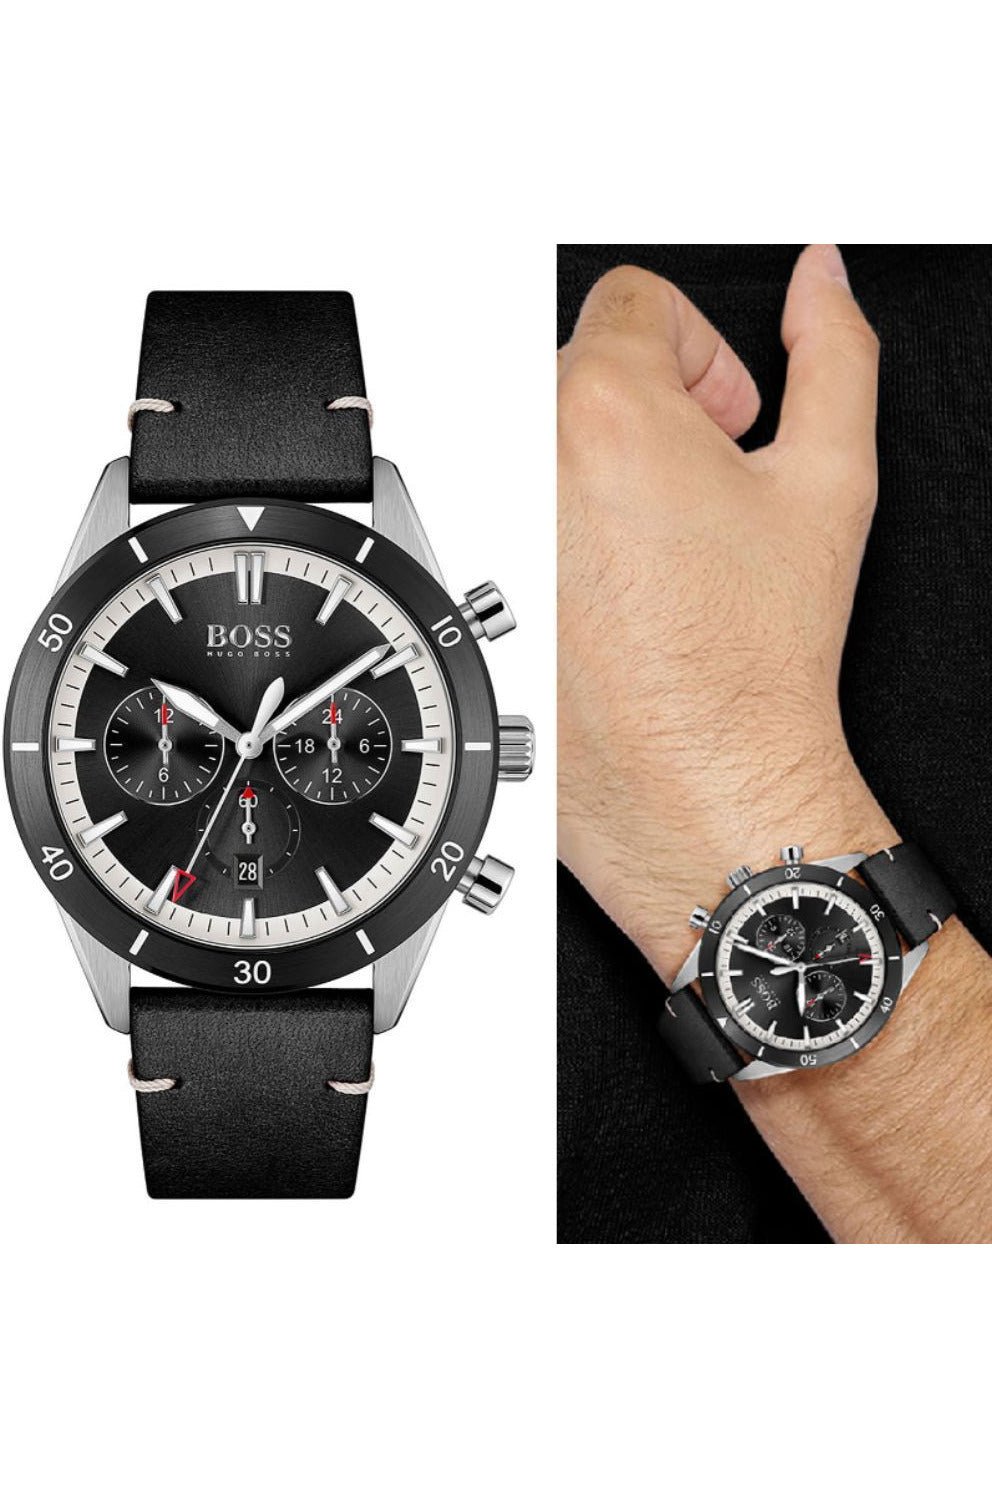 Hugo Boss Santiago Chronograph Black Dial Black Leather Strap Watch for Men - 1513864